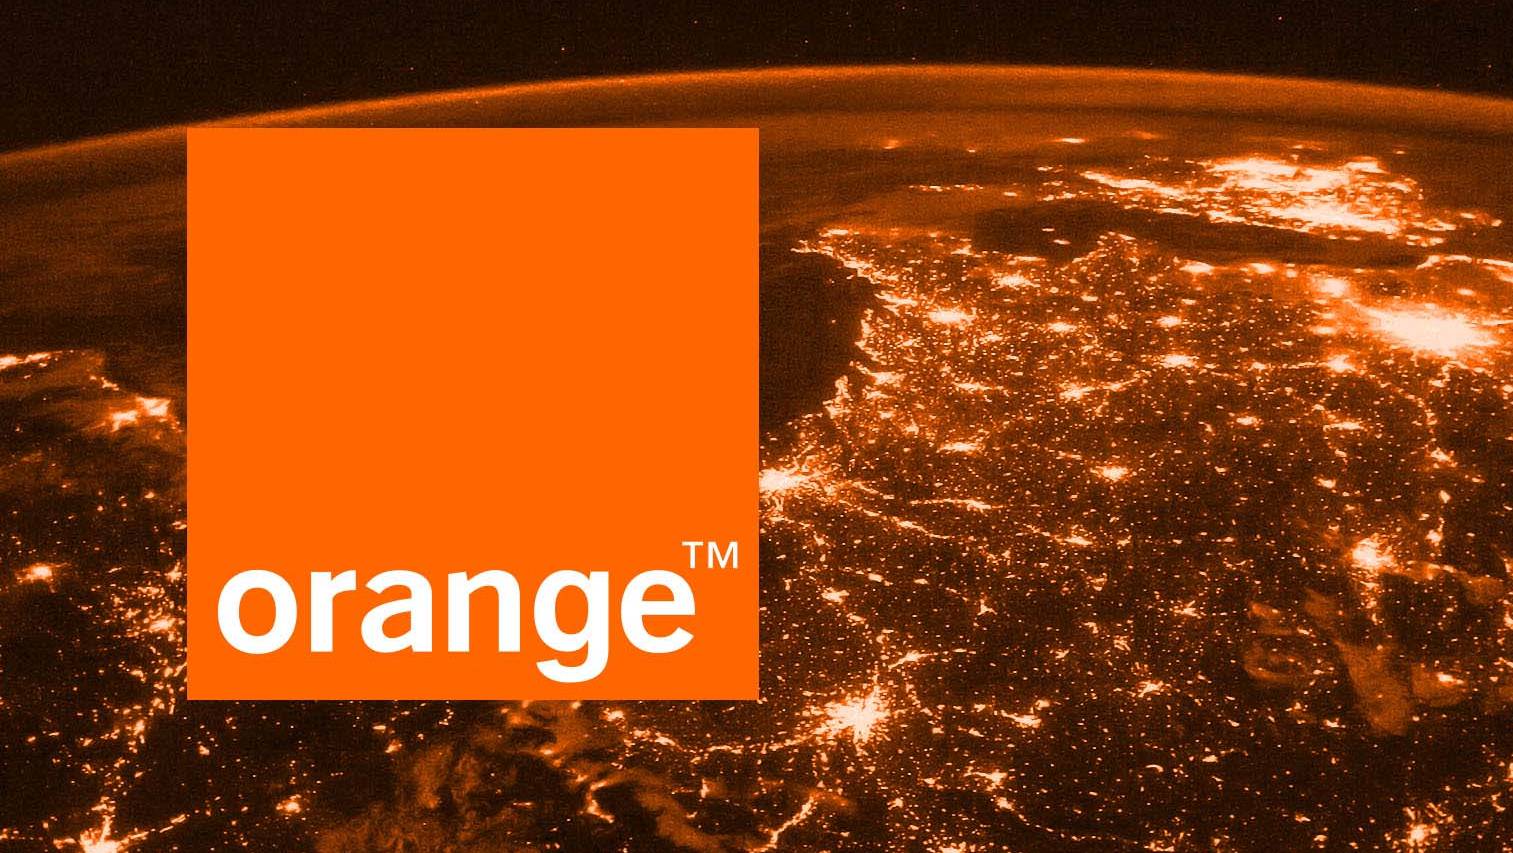 Orange Rumänien. 23. September, Herbstanfang mit tollen Angeboten im Land